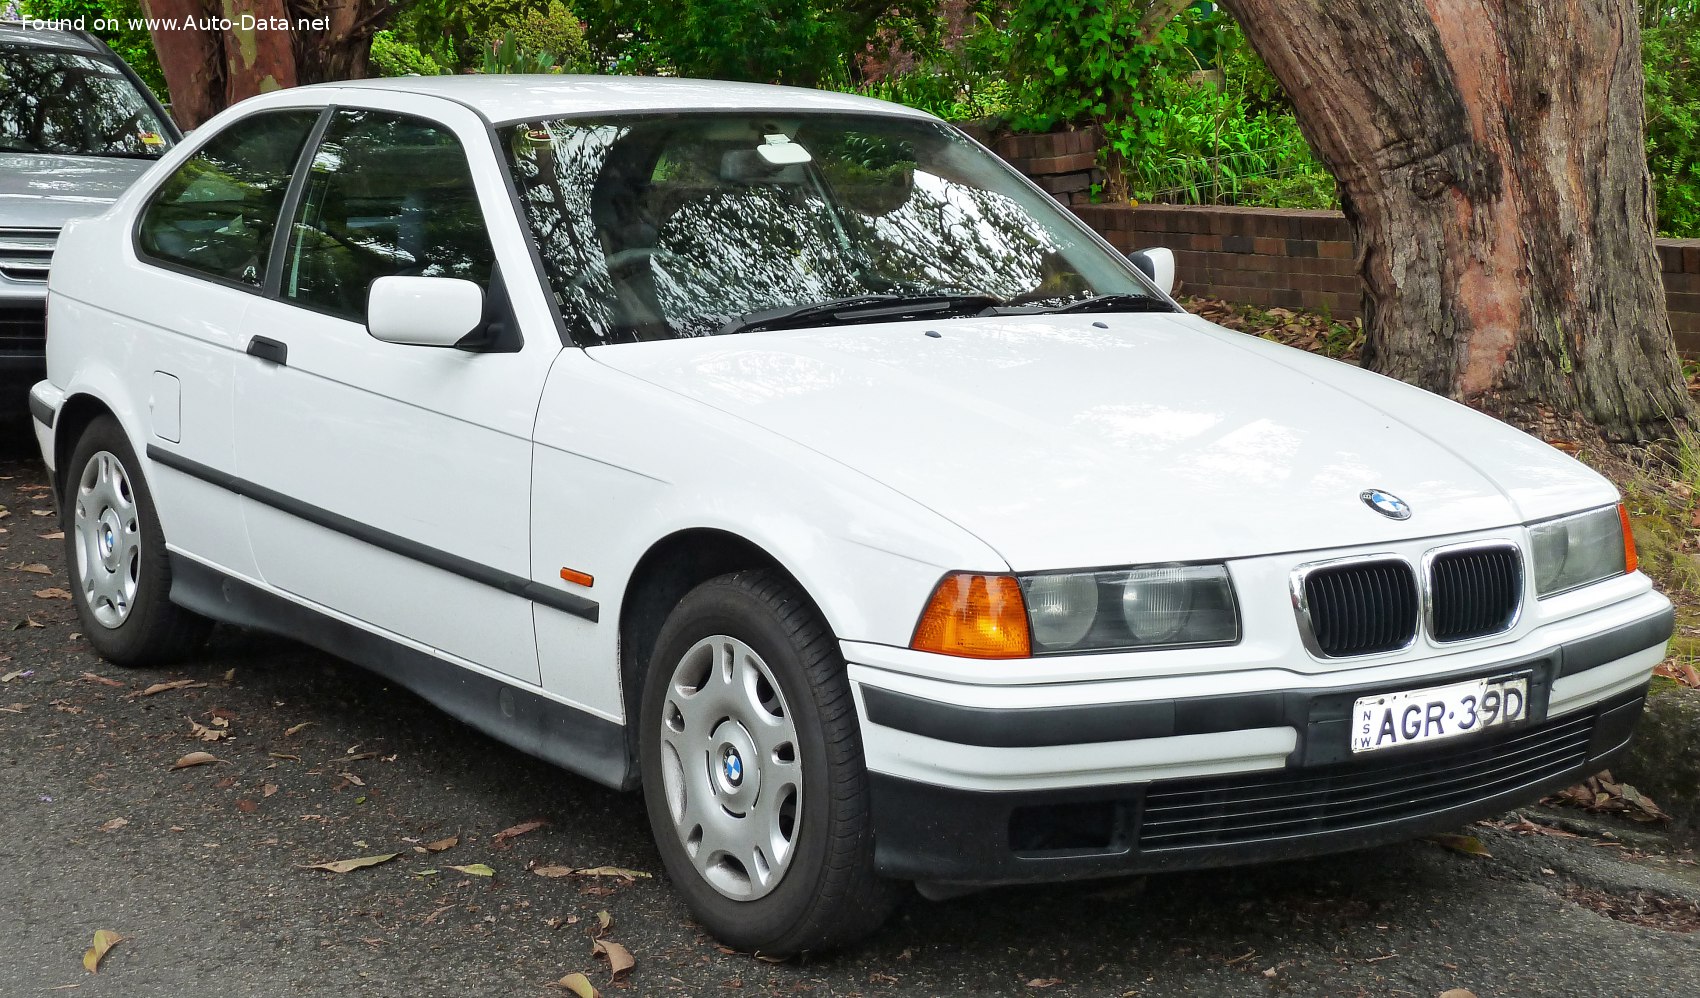 milieu Refrein Bedreven 1999 BMW 3 Series Compact (E36) 316i (105 Hp) | Technical specs, data, fuel  consumption, Dimensions